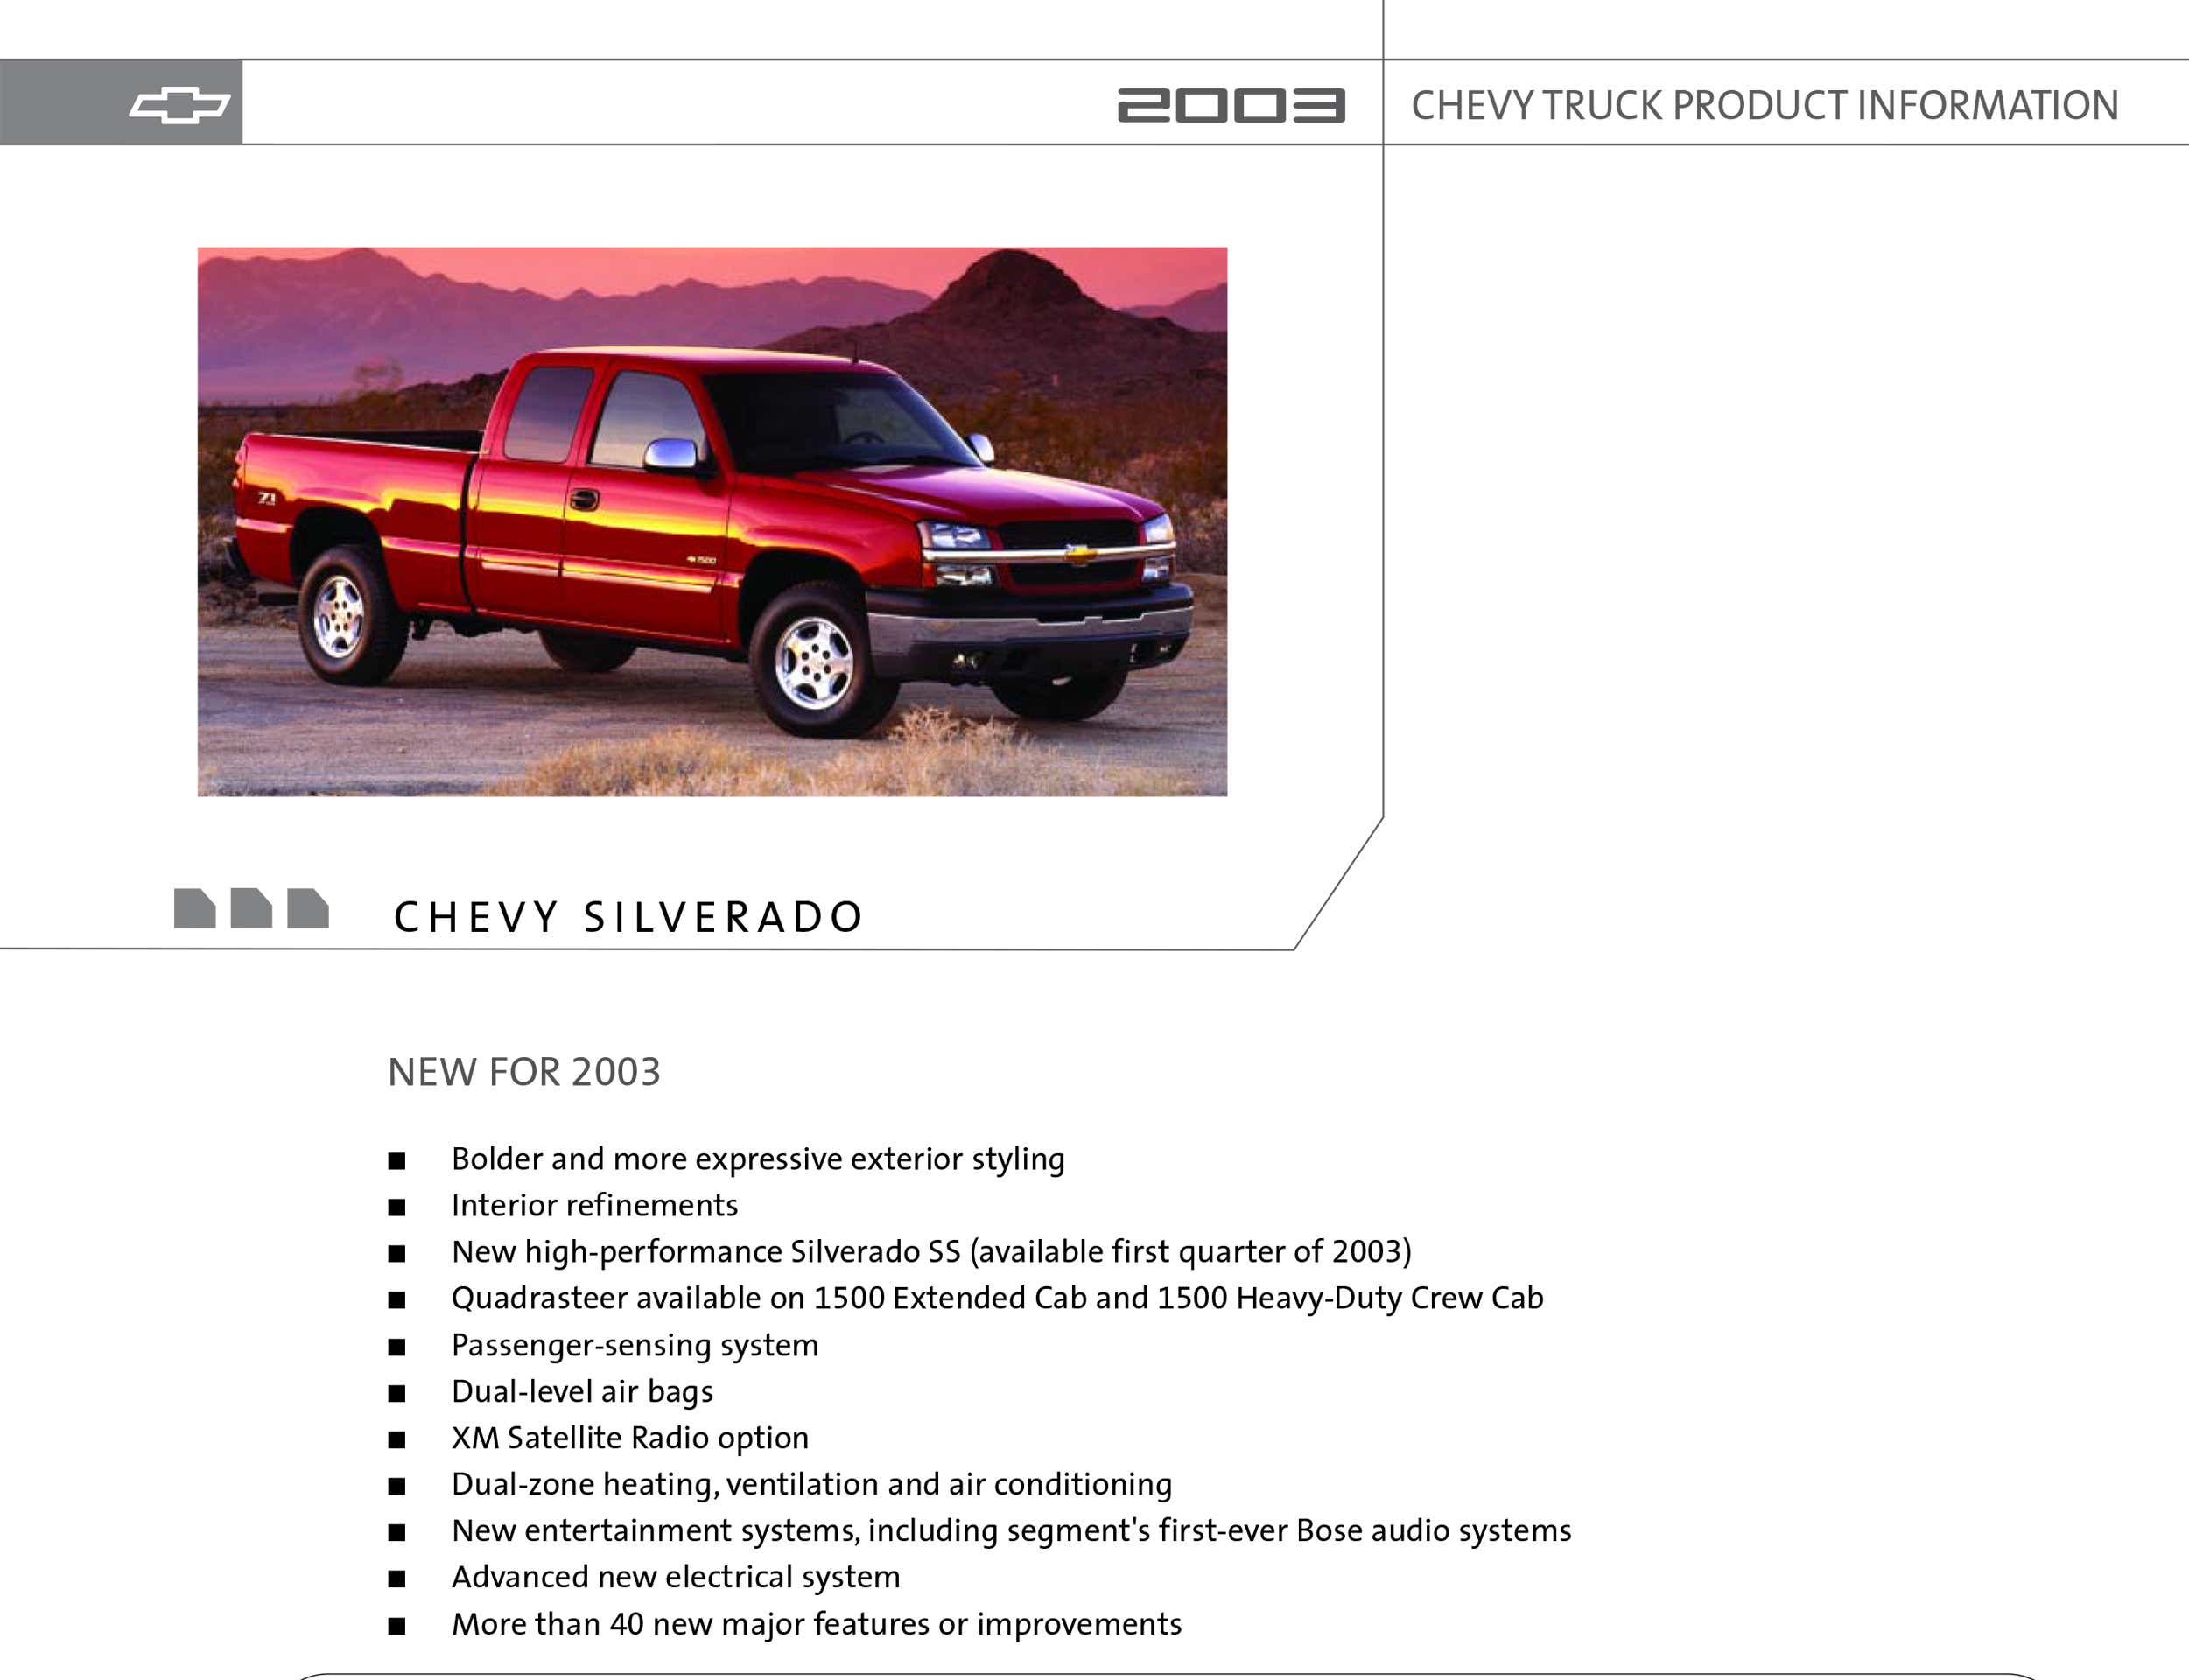 Chevy Silverado Quadrasteer press release and image.